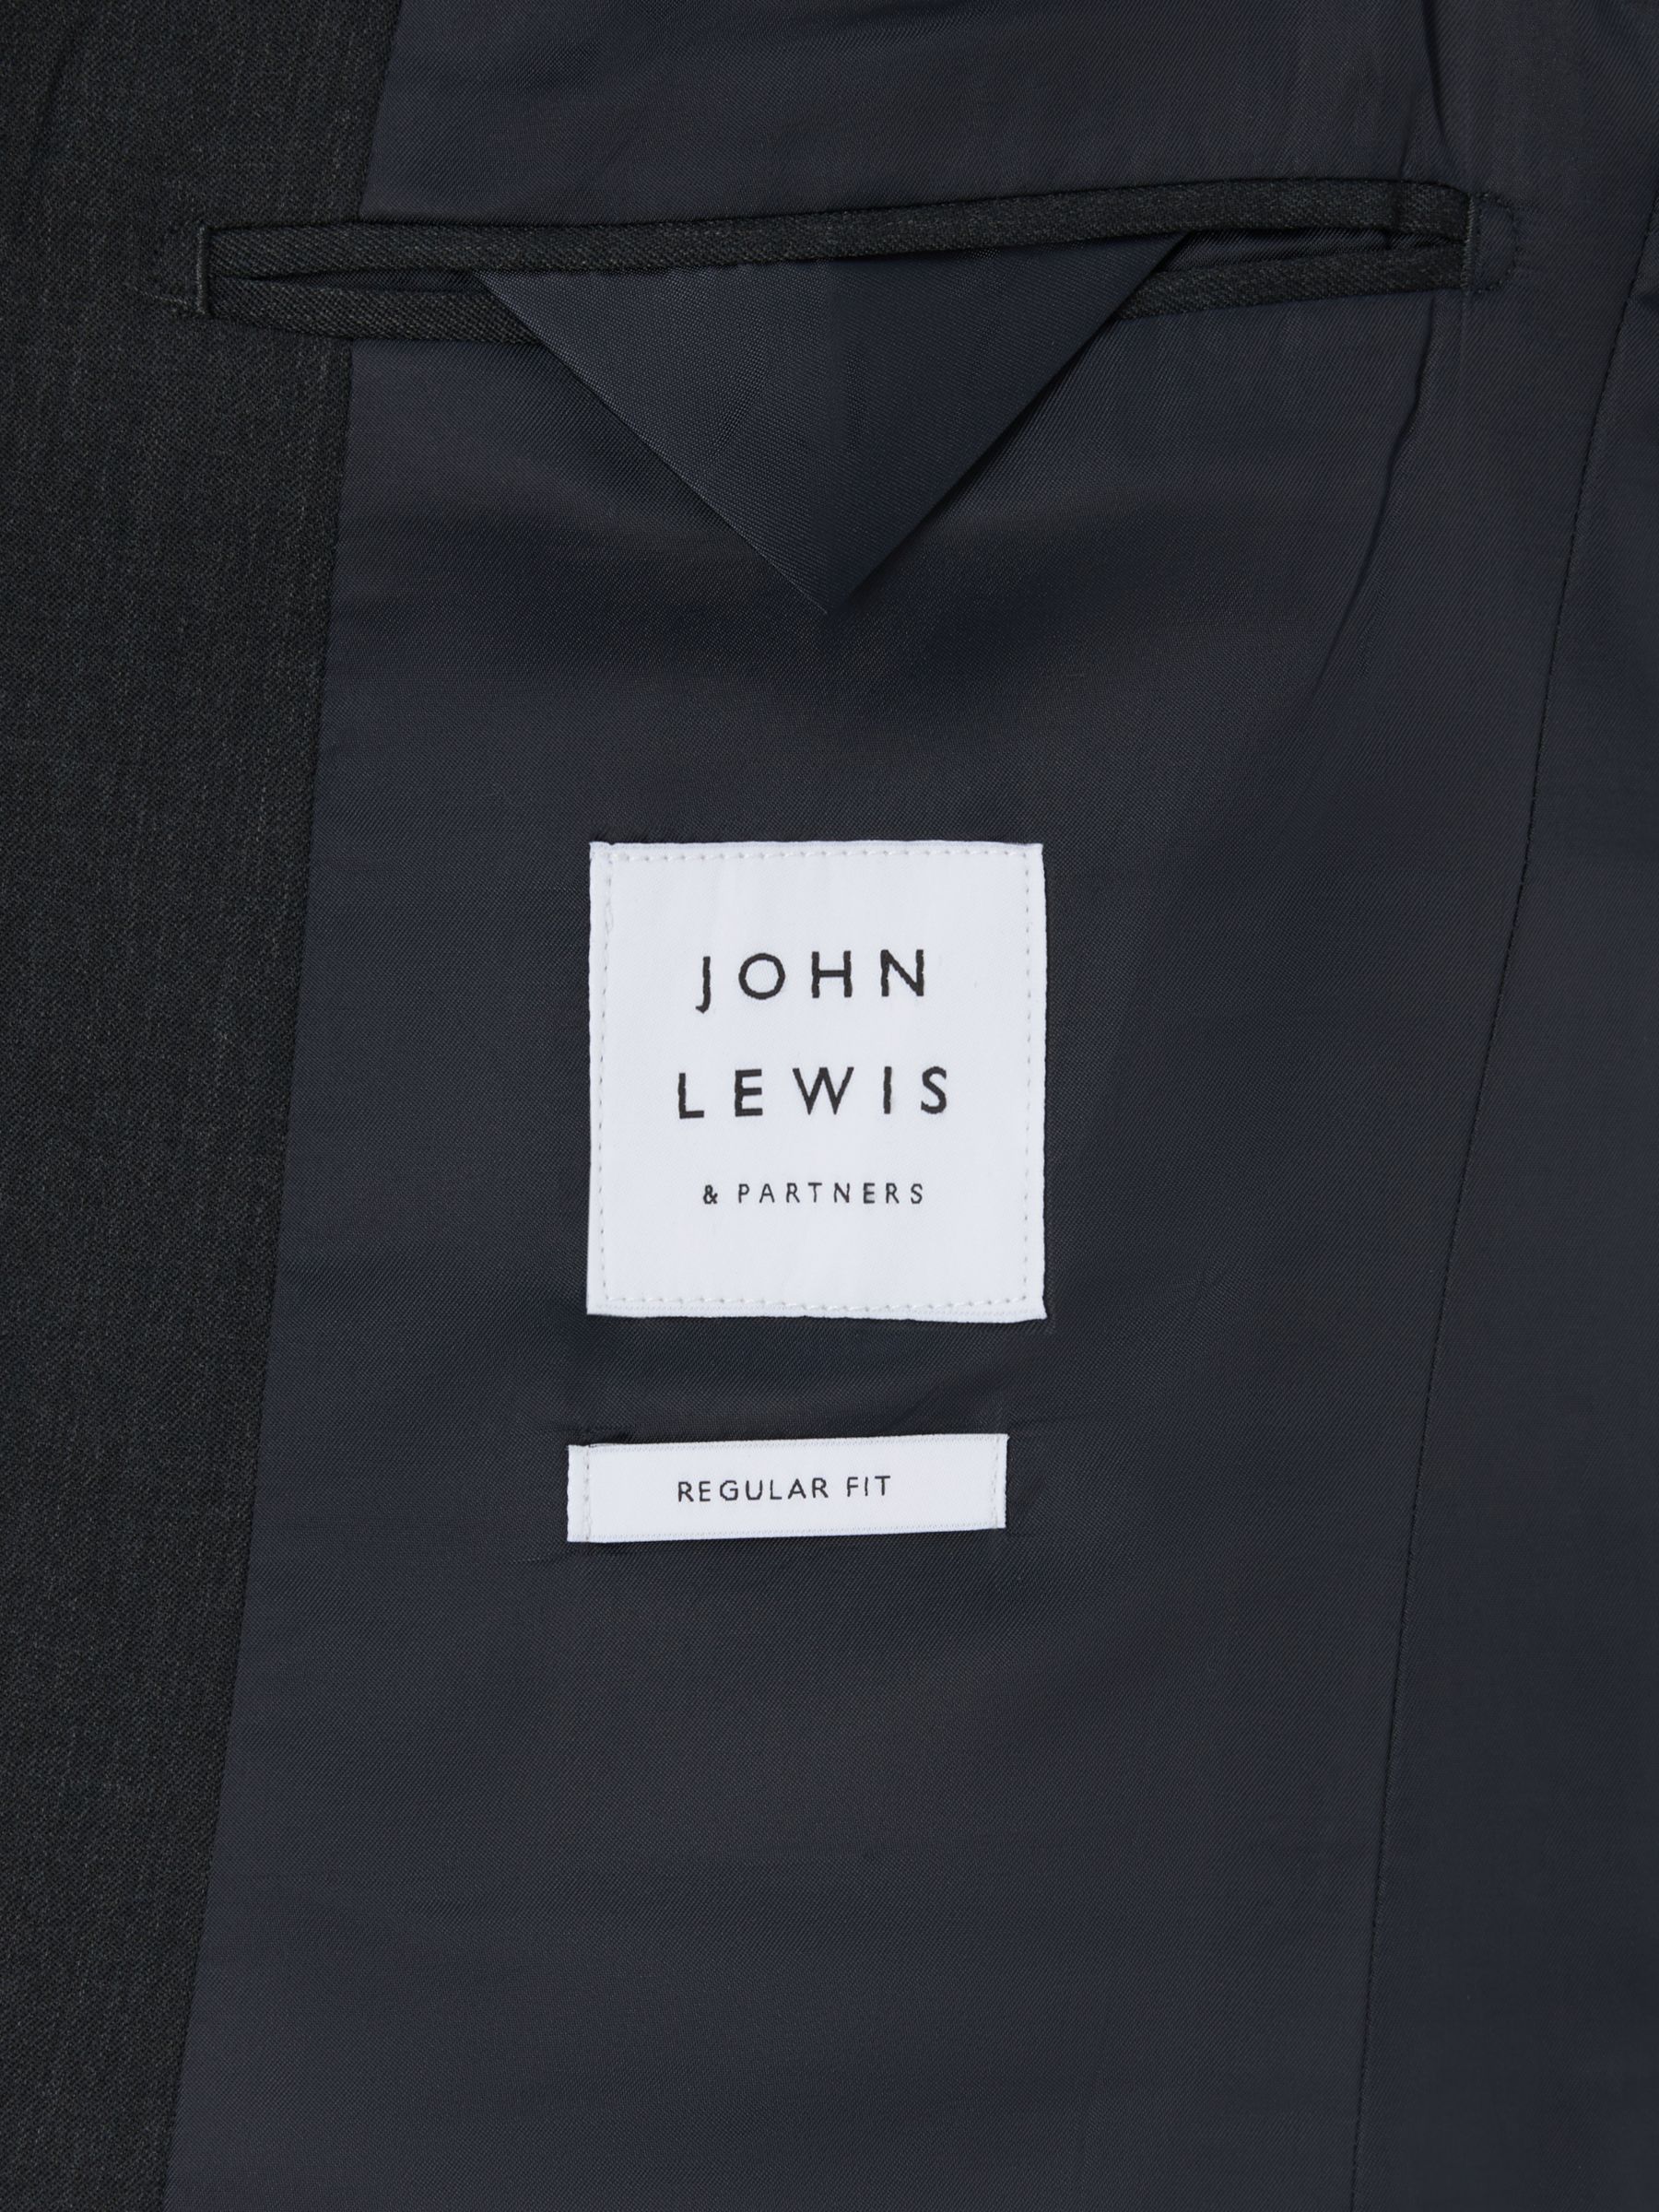 John Lewis Washable Wool Blend Regular Fit Suit Jacket, Charcoal, 42R